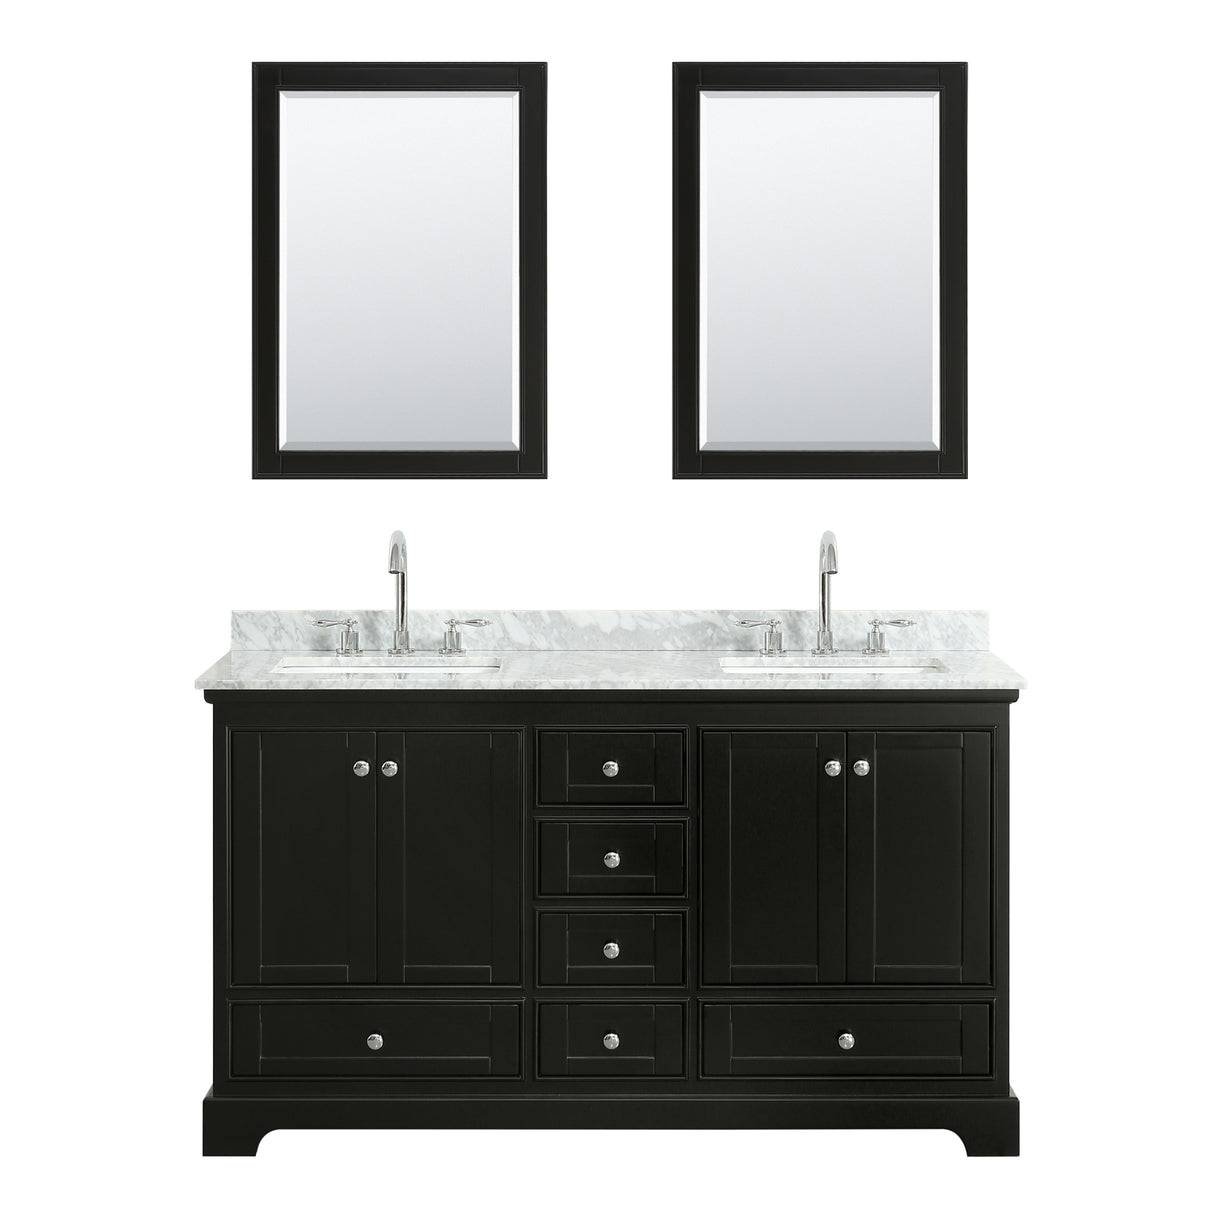 Deborah 60 Inch Double Bathroom Vanity in Dark Espresso White Carrara Marble Countertop Undermount Square Sinks and 24 Inch Mirrors